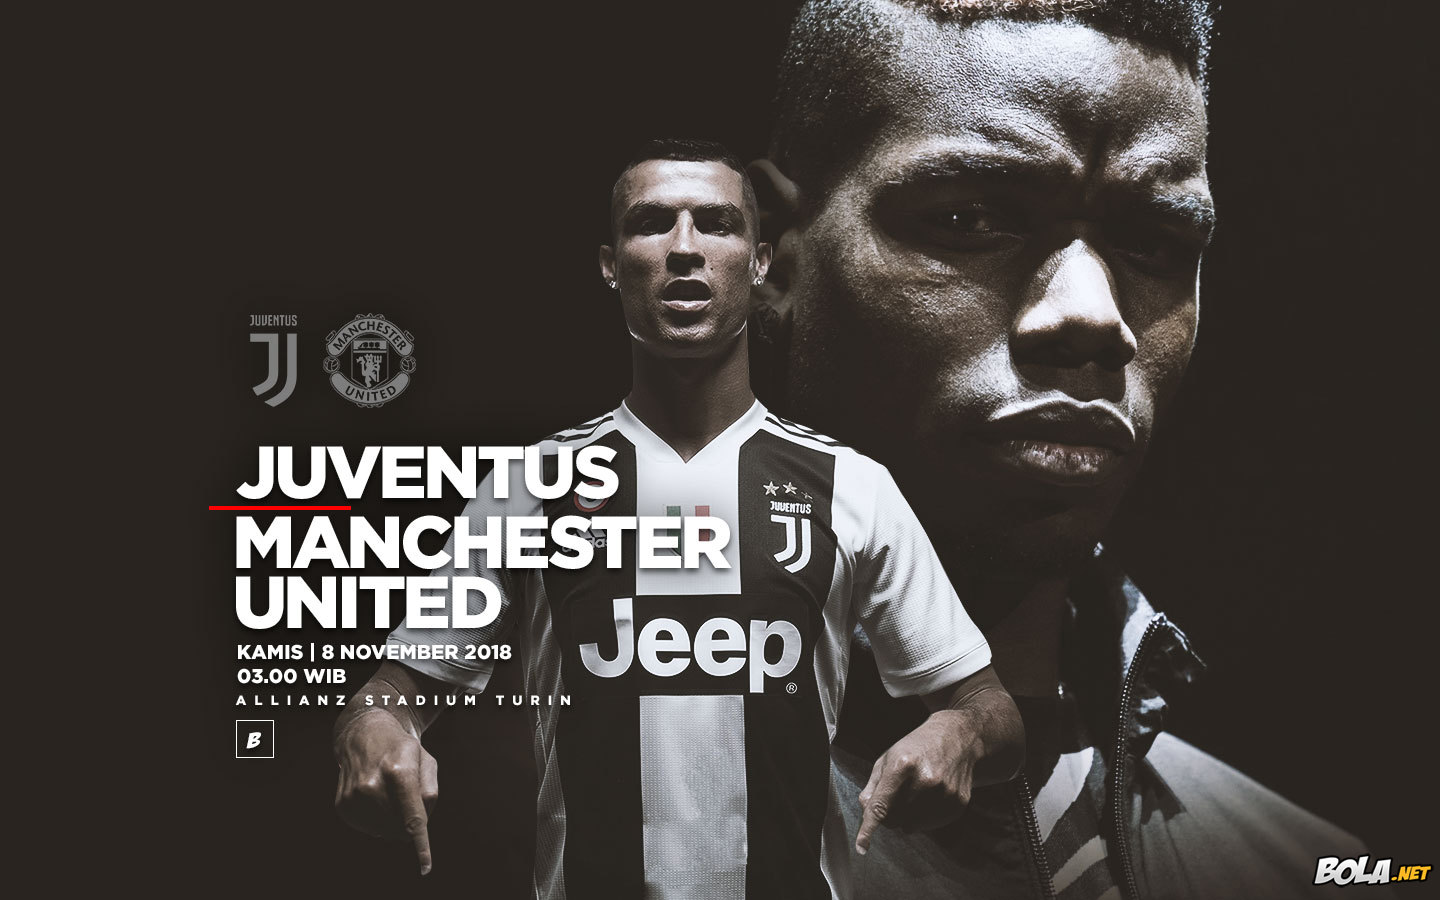 Deskripsi : Wallpaper Juventus Vs Manchester United, size: 1440x900